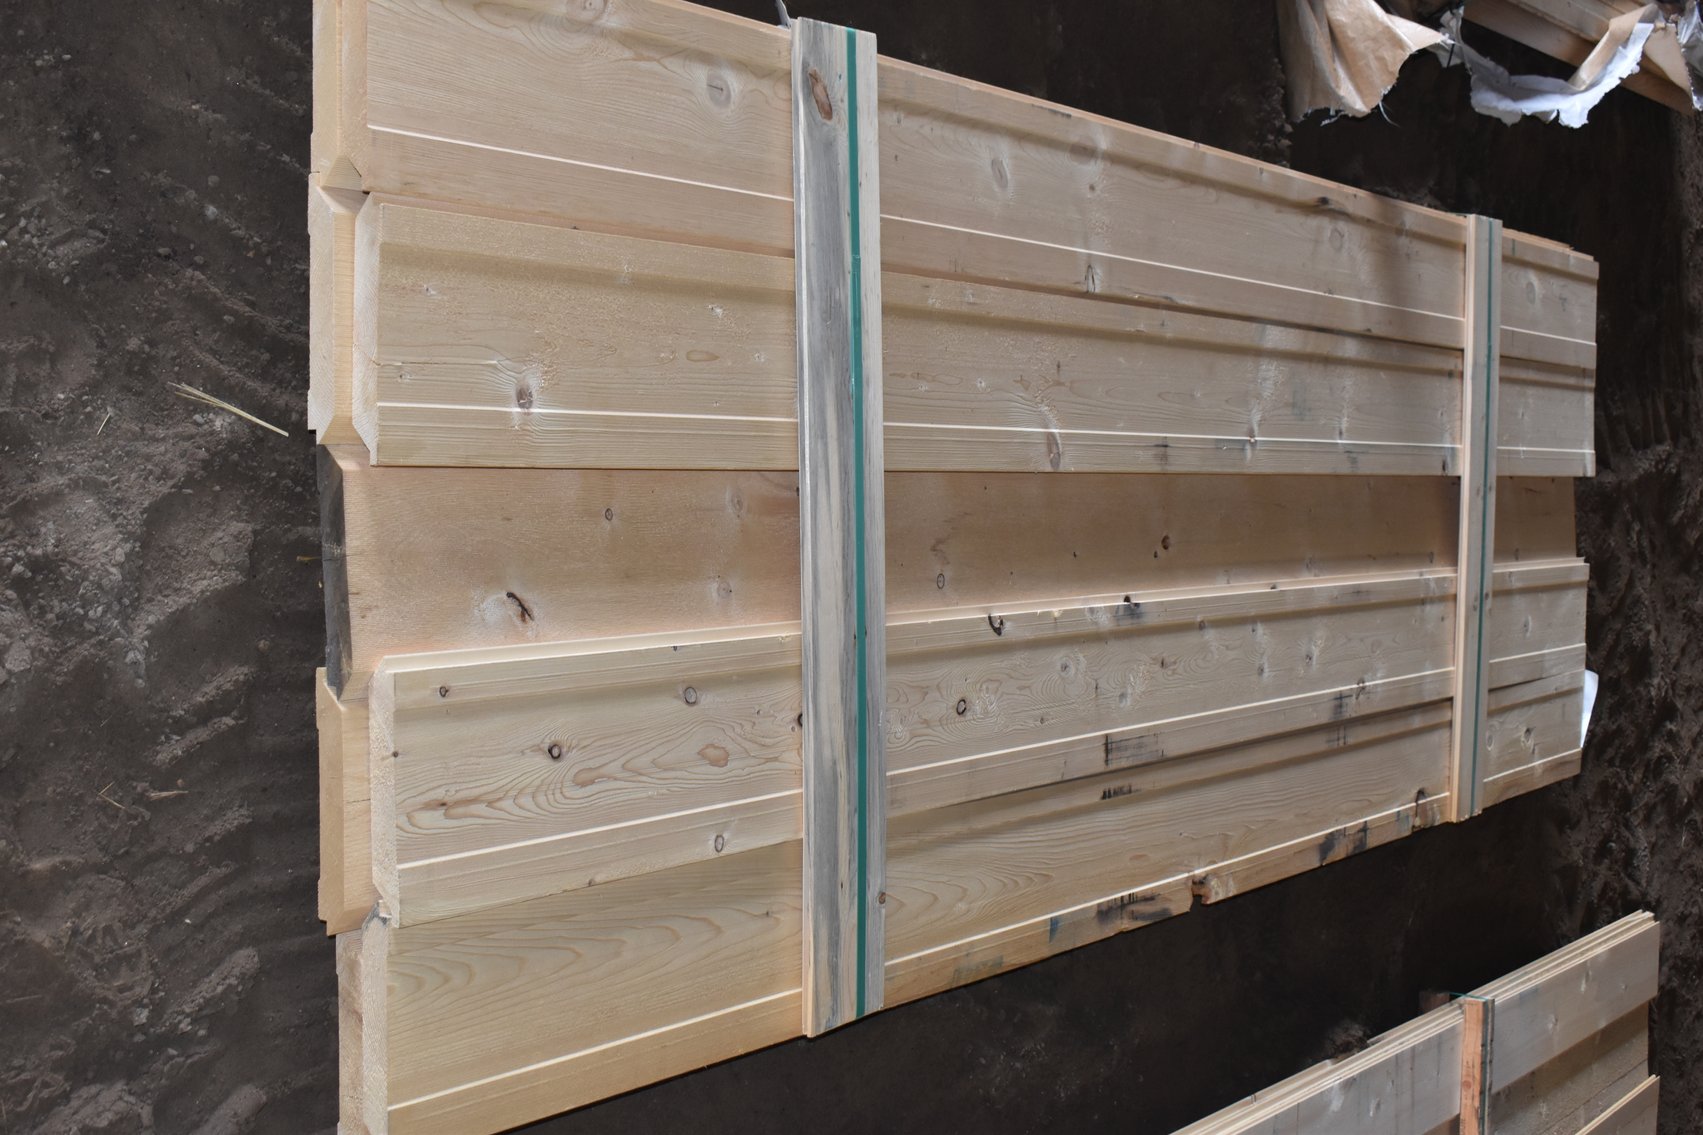 Surplus Lumber: Red Oak Flooring, Timbers, T&G, Composite Decking, Hardware